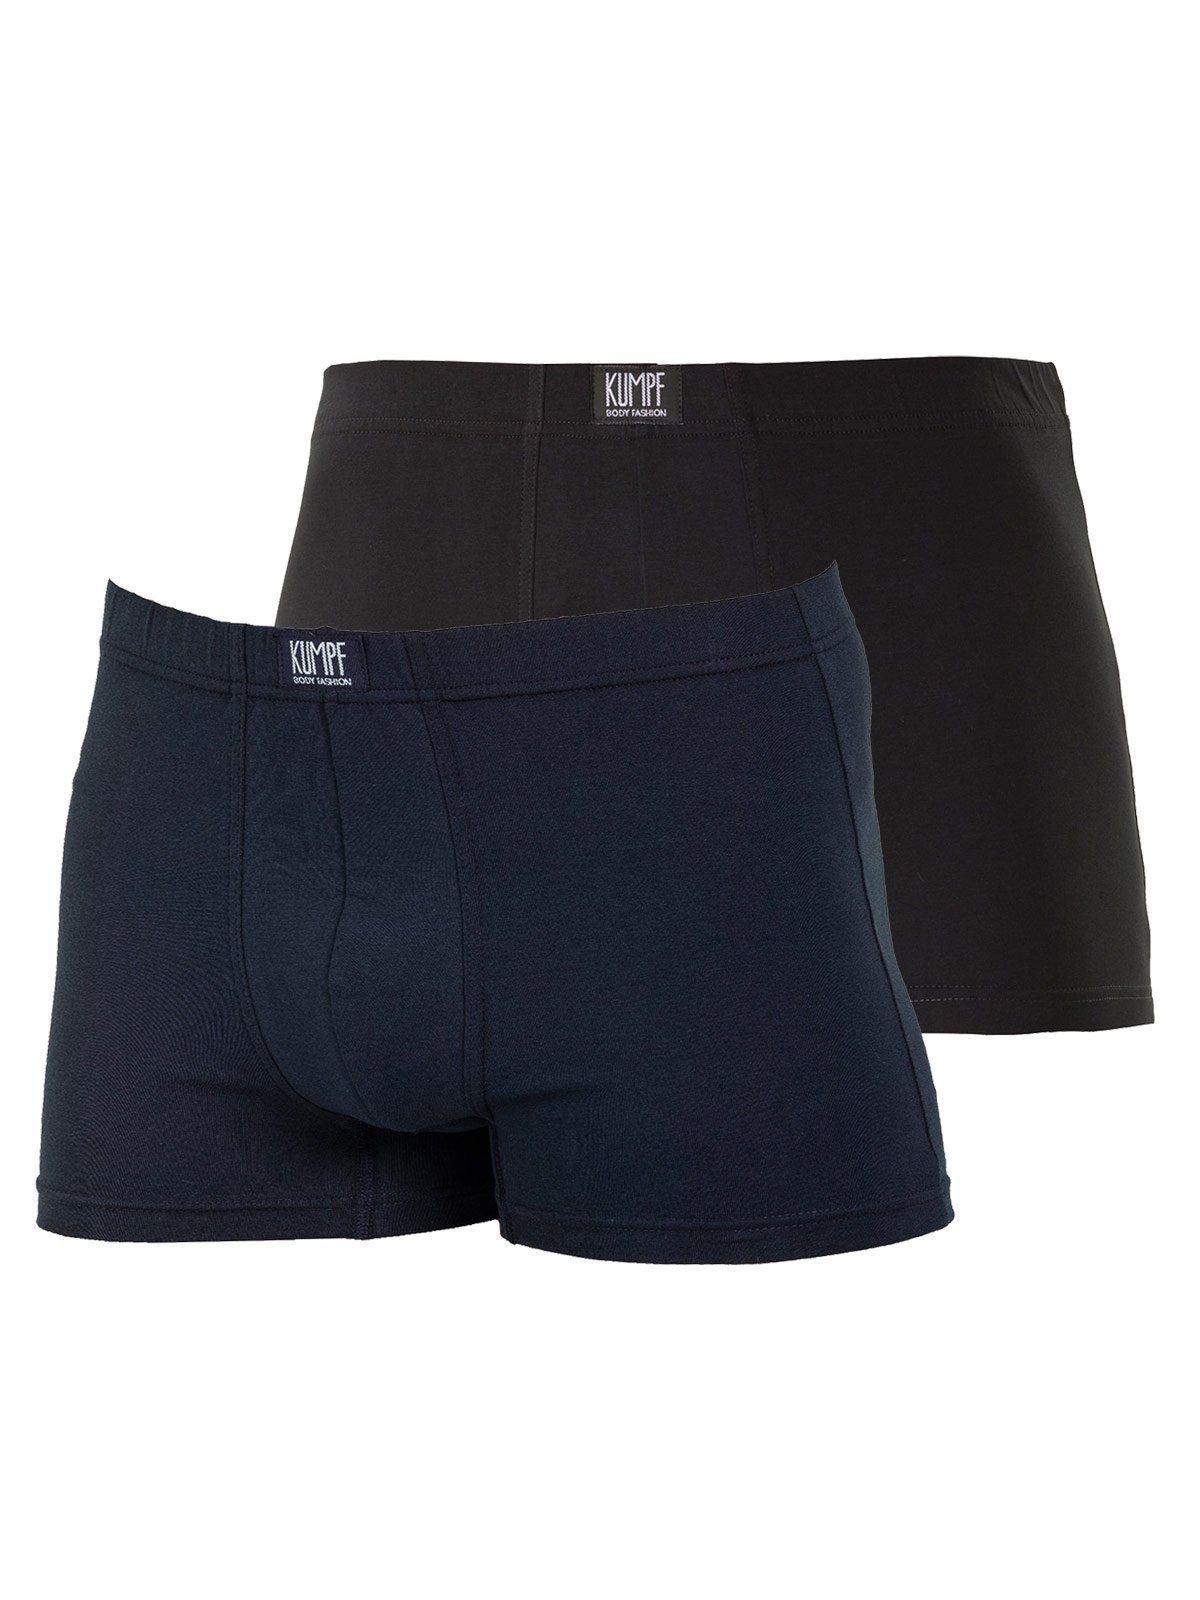 KUMPF Retro Pants 2er Sparpack Herren Pants Bio Cotton (Spar-Set, 2-St) hohe Markenqualität navy schwarz